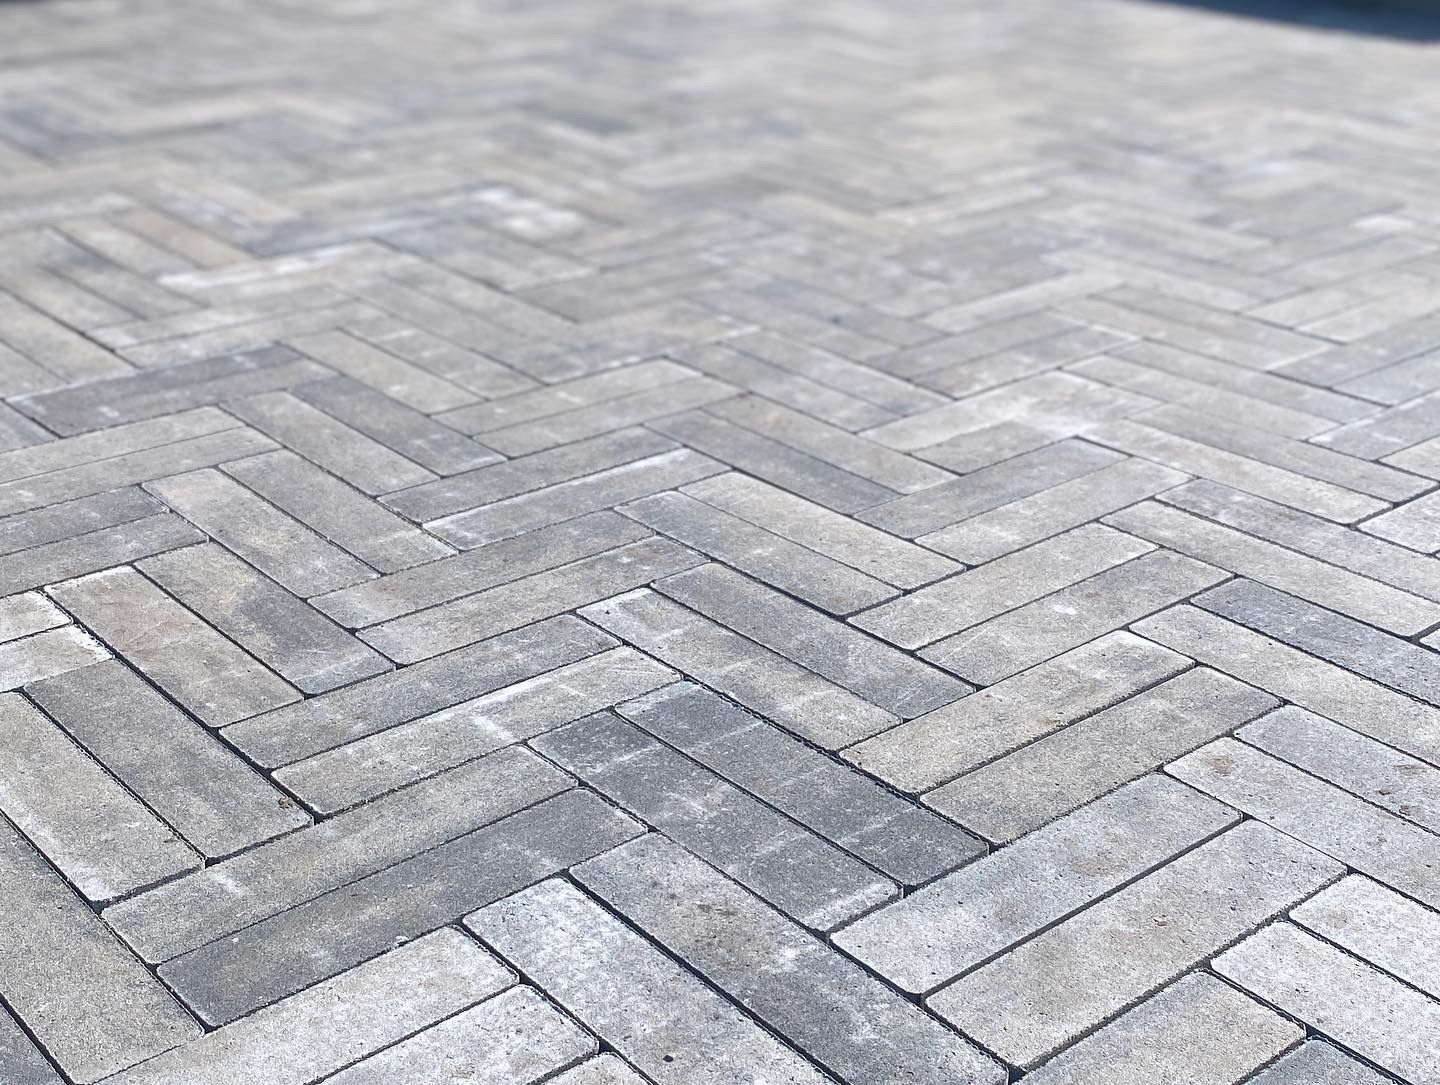 a close up of a brick pavement with a herringbone pattern